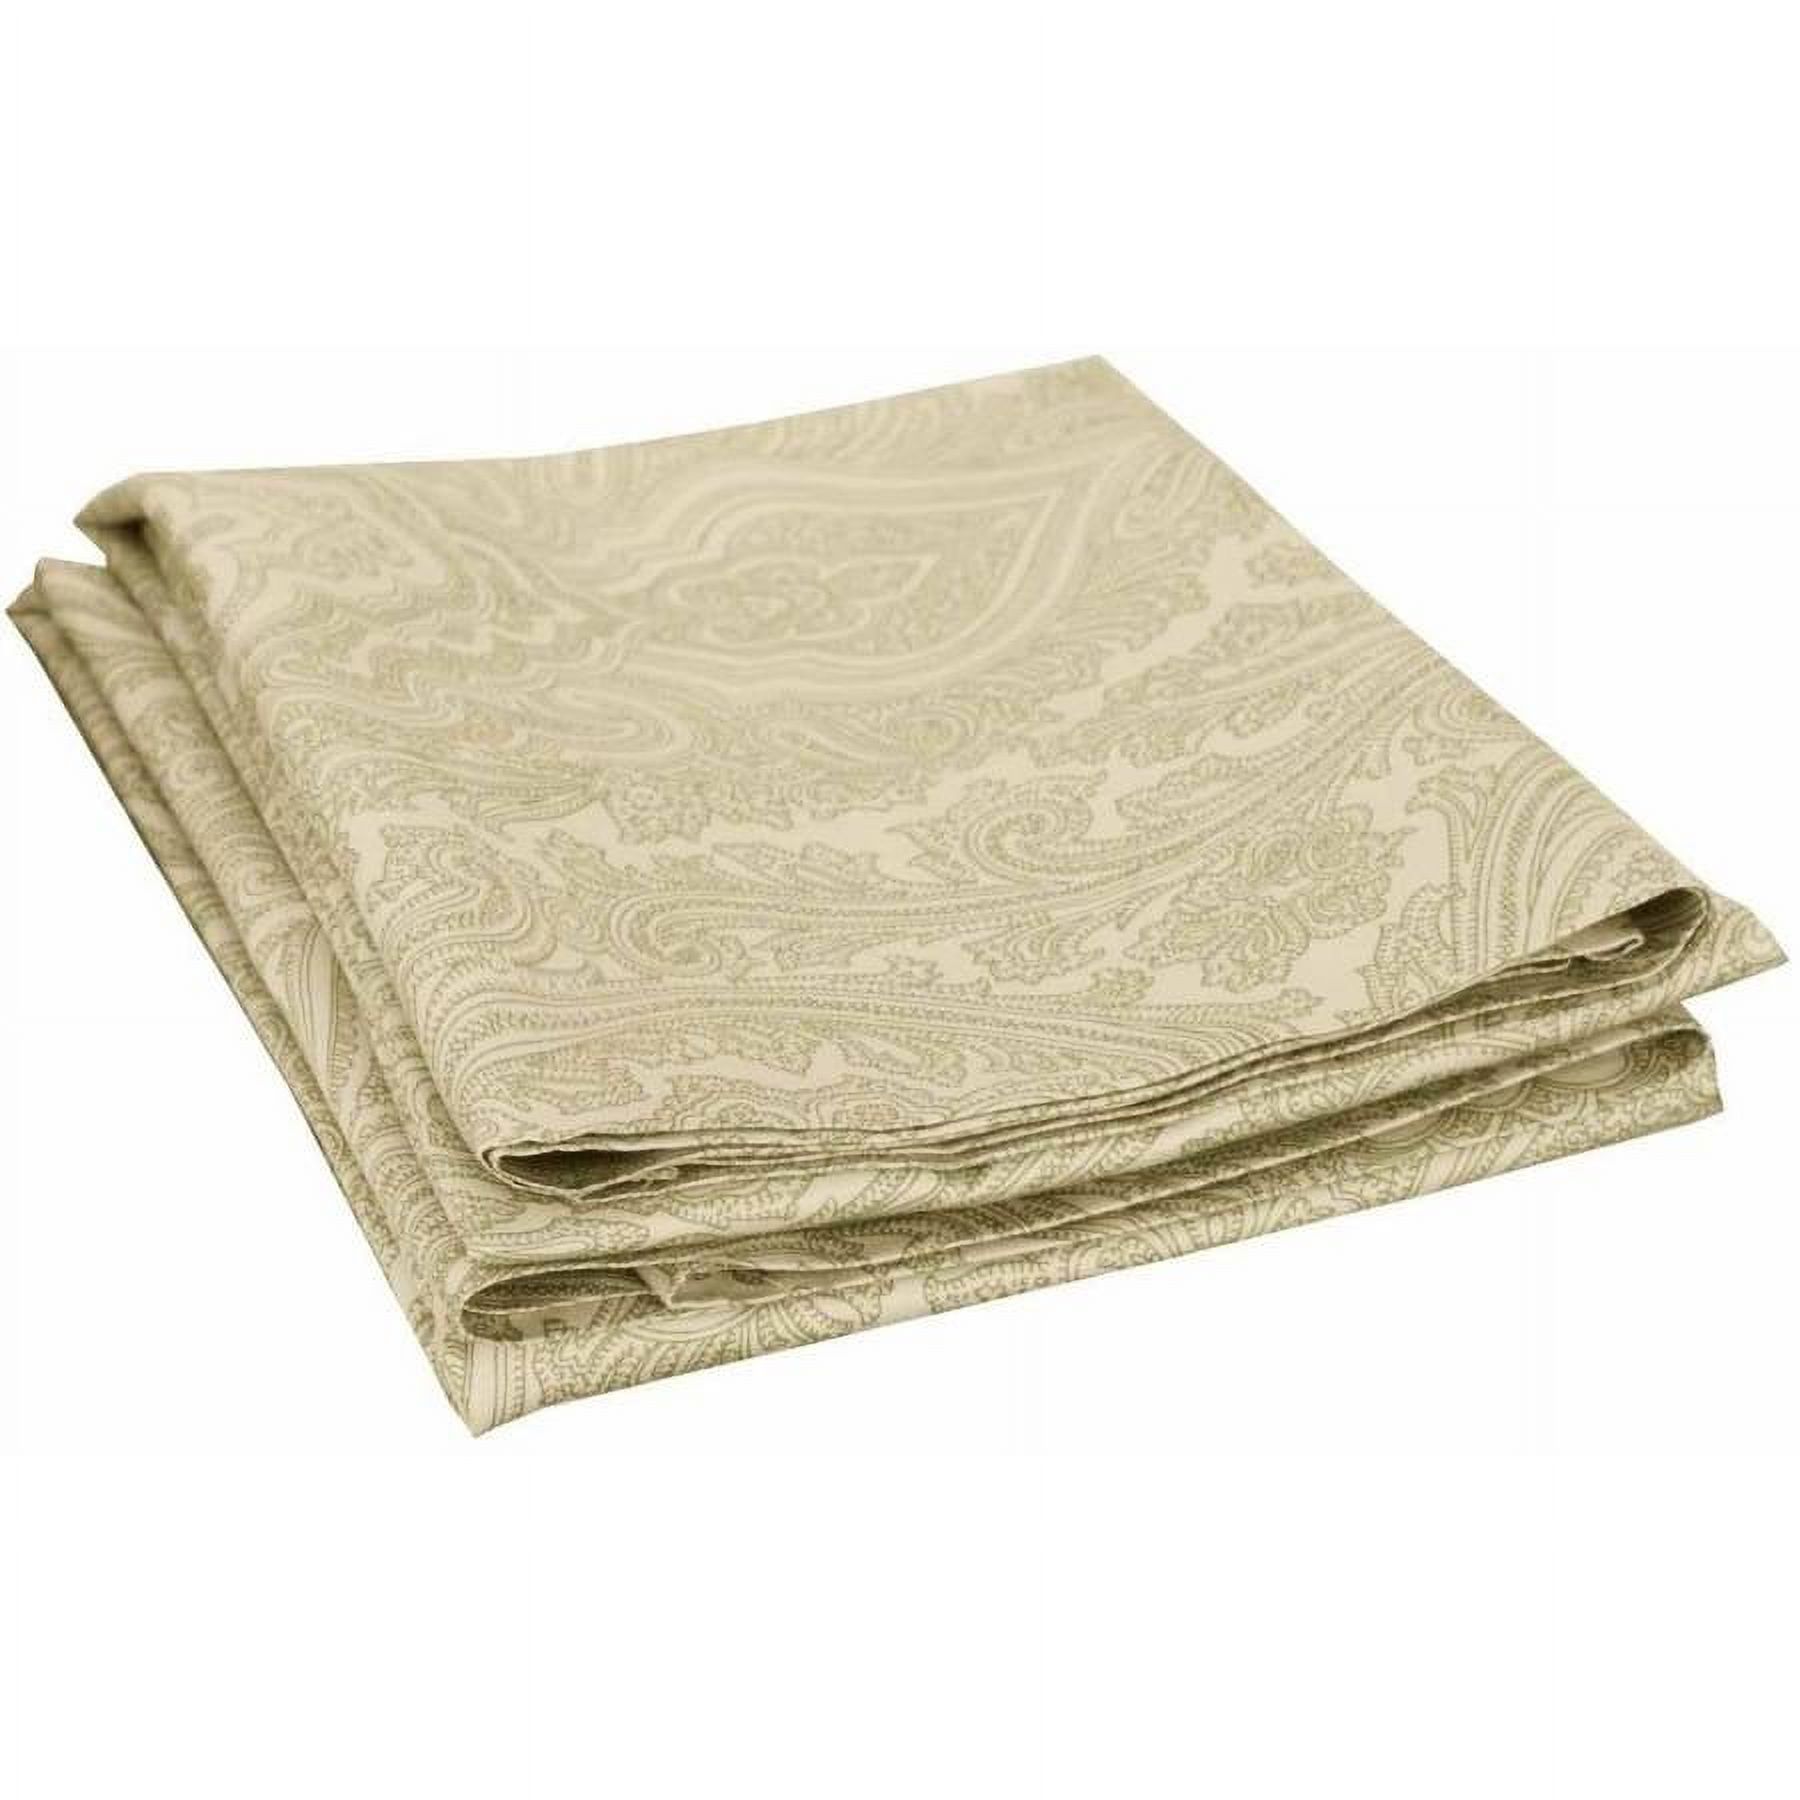 Superior 600 Thread Count Cotton Blend Wrinkle Resistant Italian Paisley Pillowcase Set, Sage - image 1 of 3